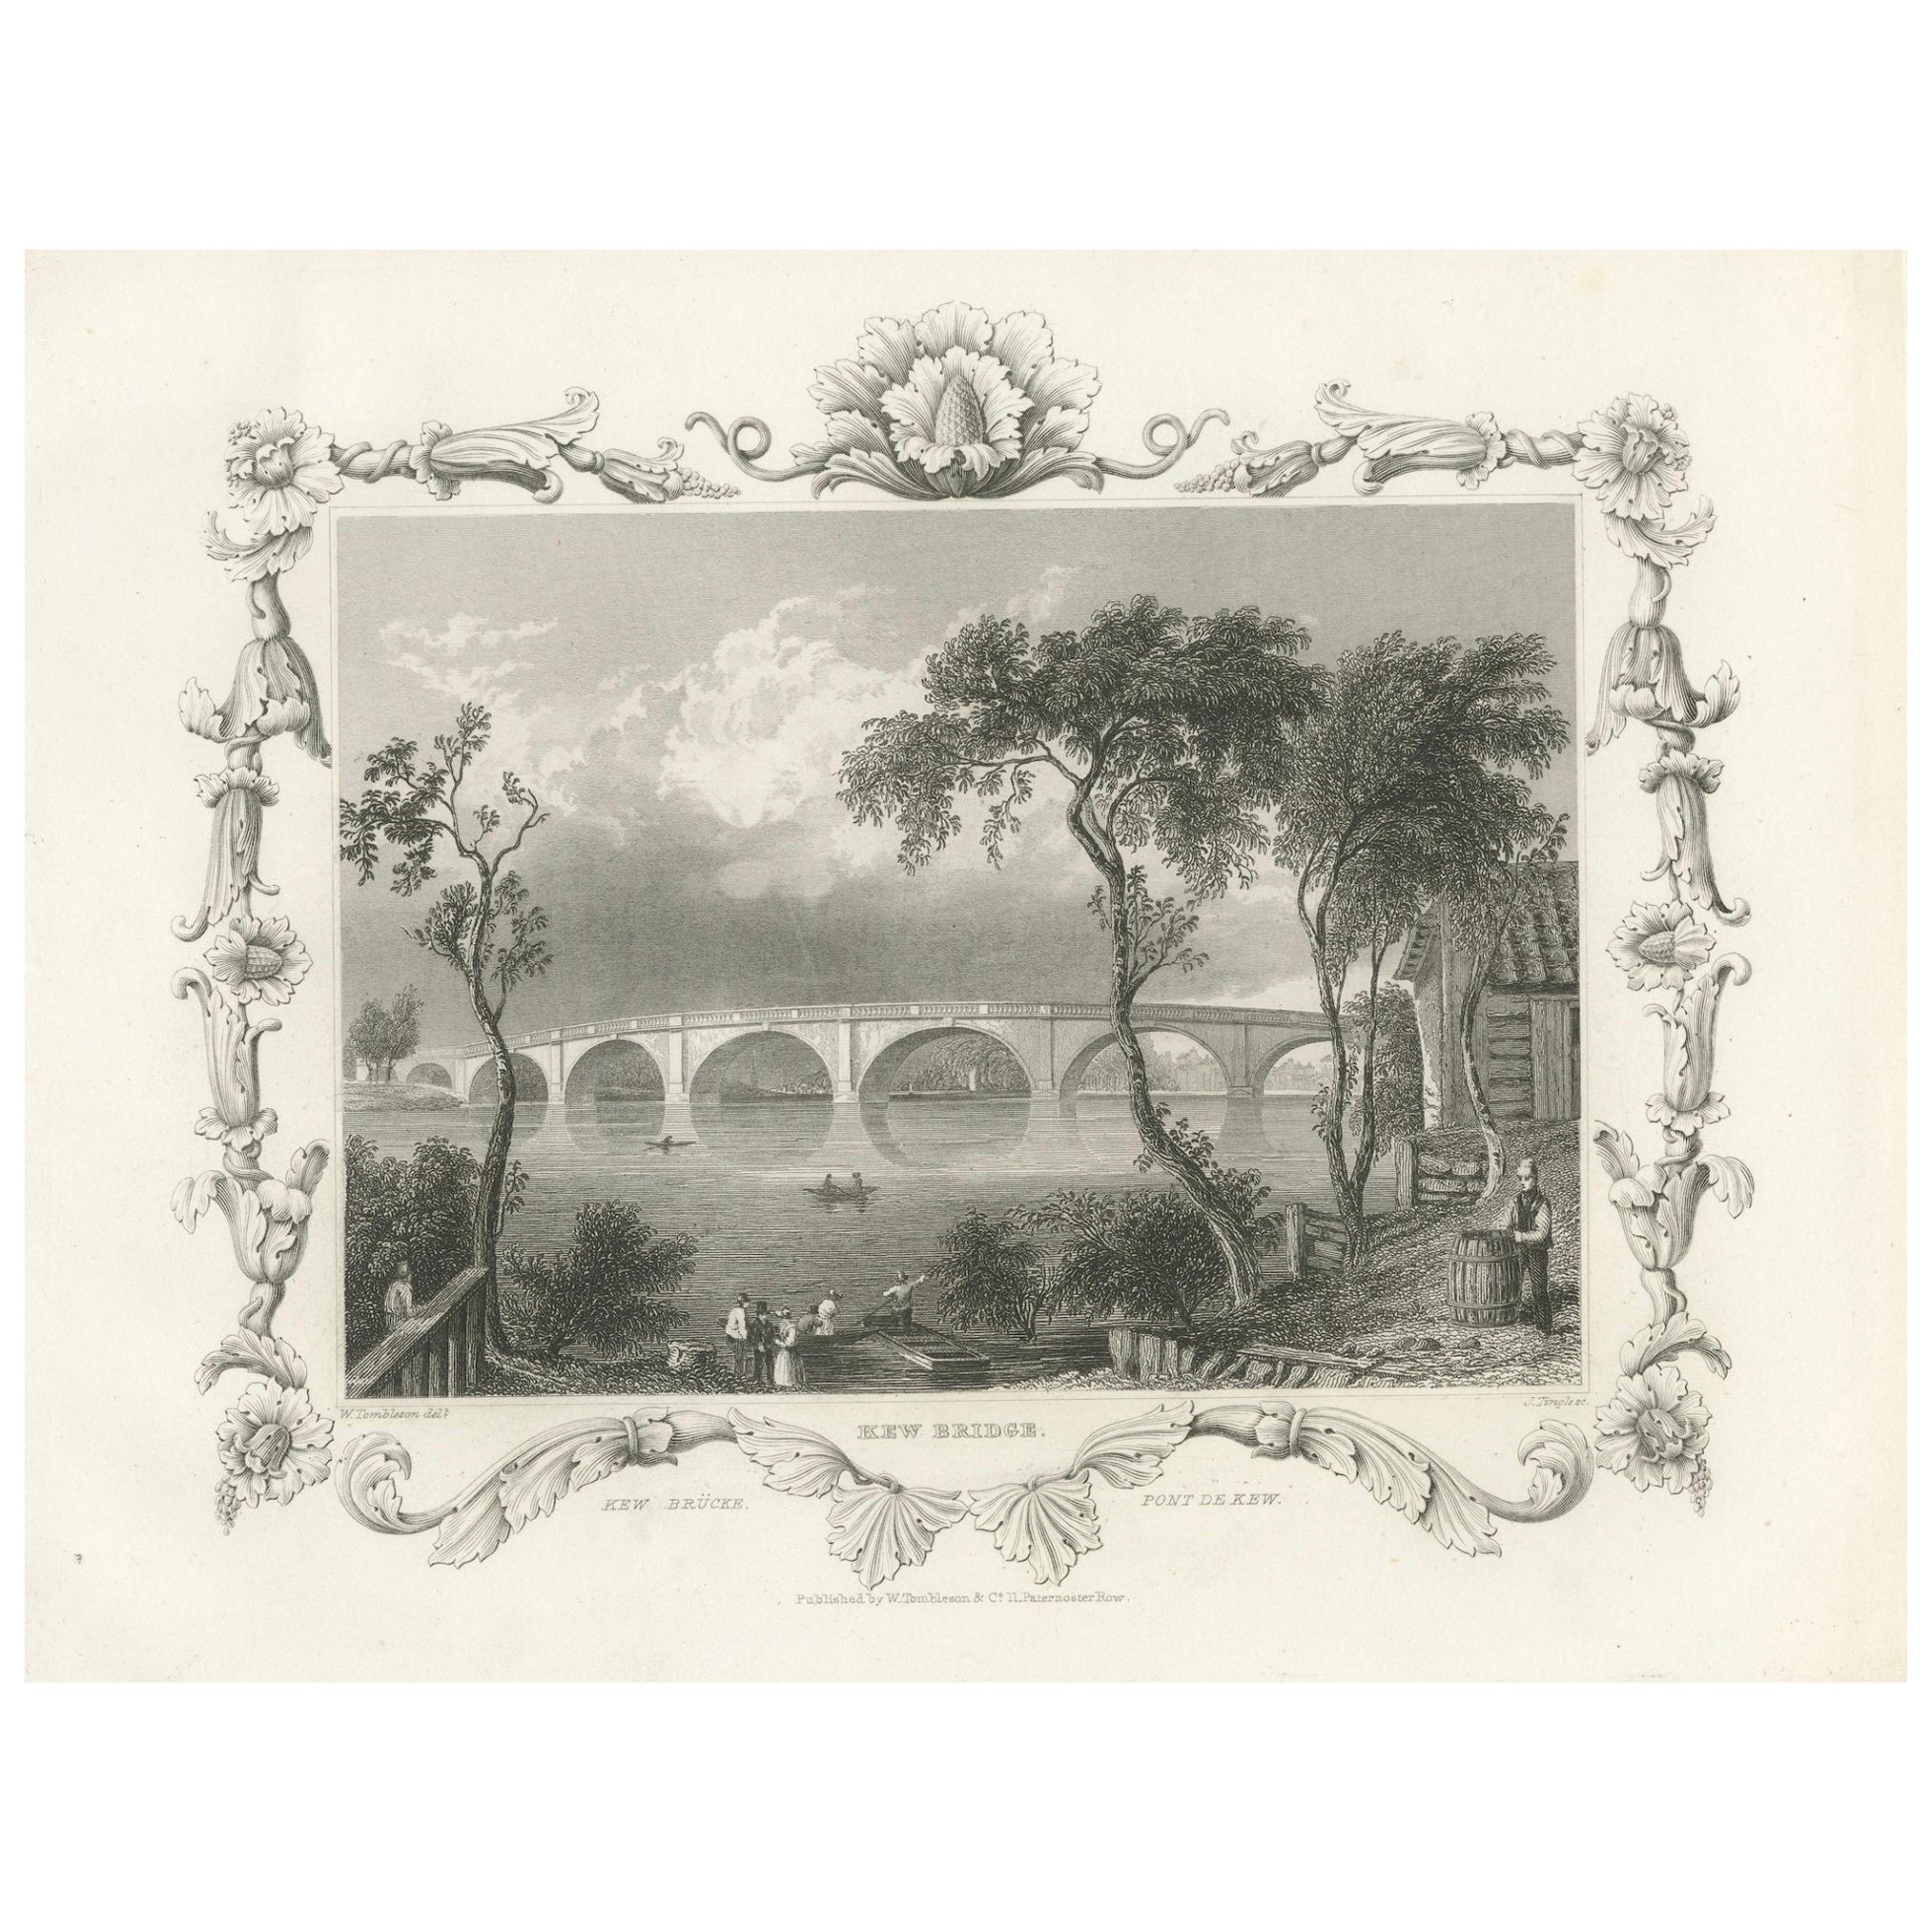  Charming Engraving of Kew Bridge over the River Thames, 1835